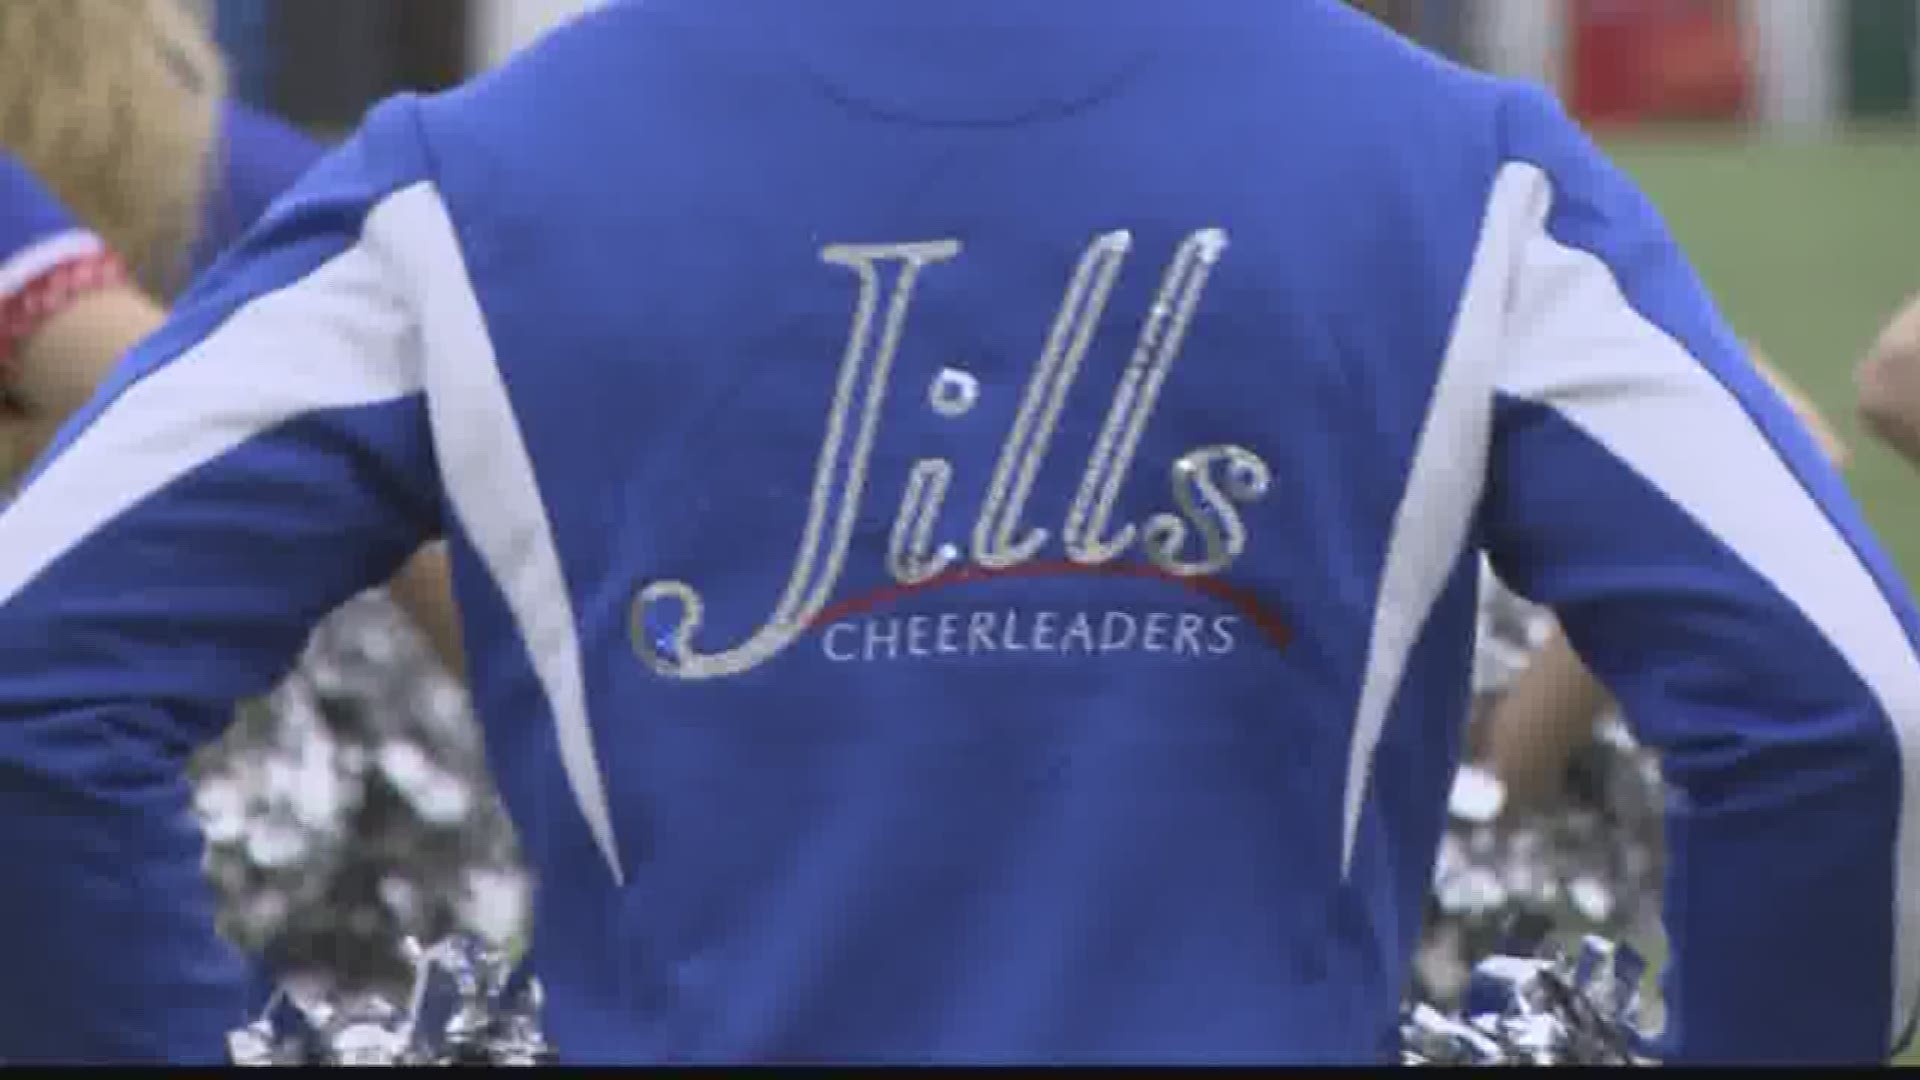 Jills Cheerleaders Win Latest Round Of Legal Battle